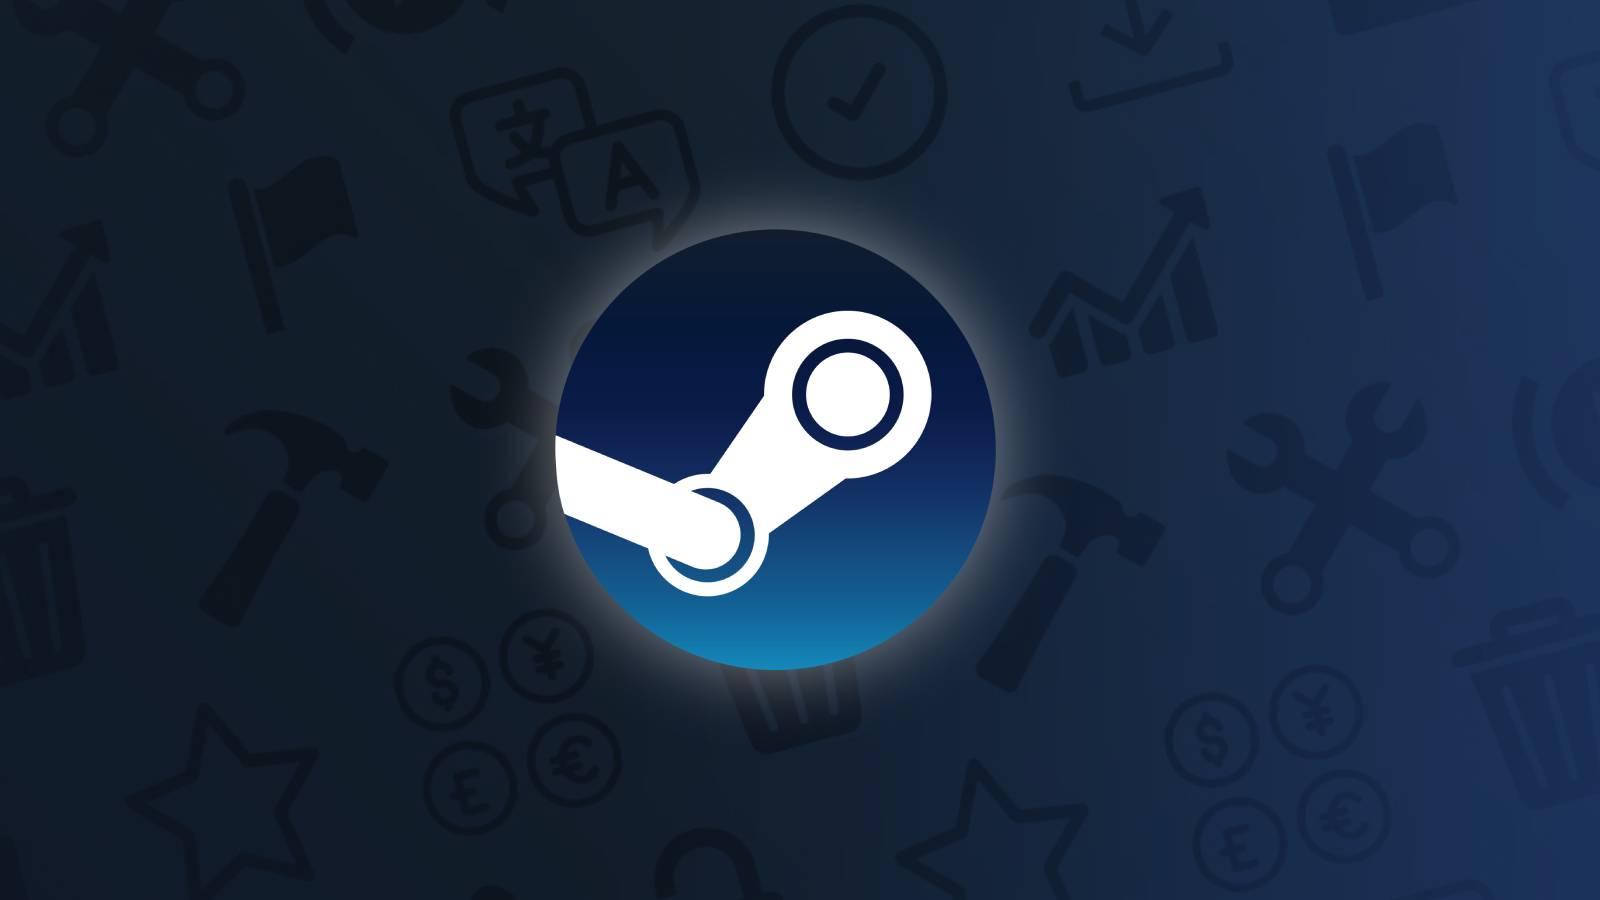 The Valve logo, sitting on the 'Steamworks' banner background.